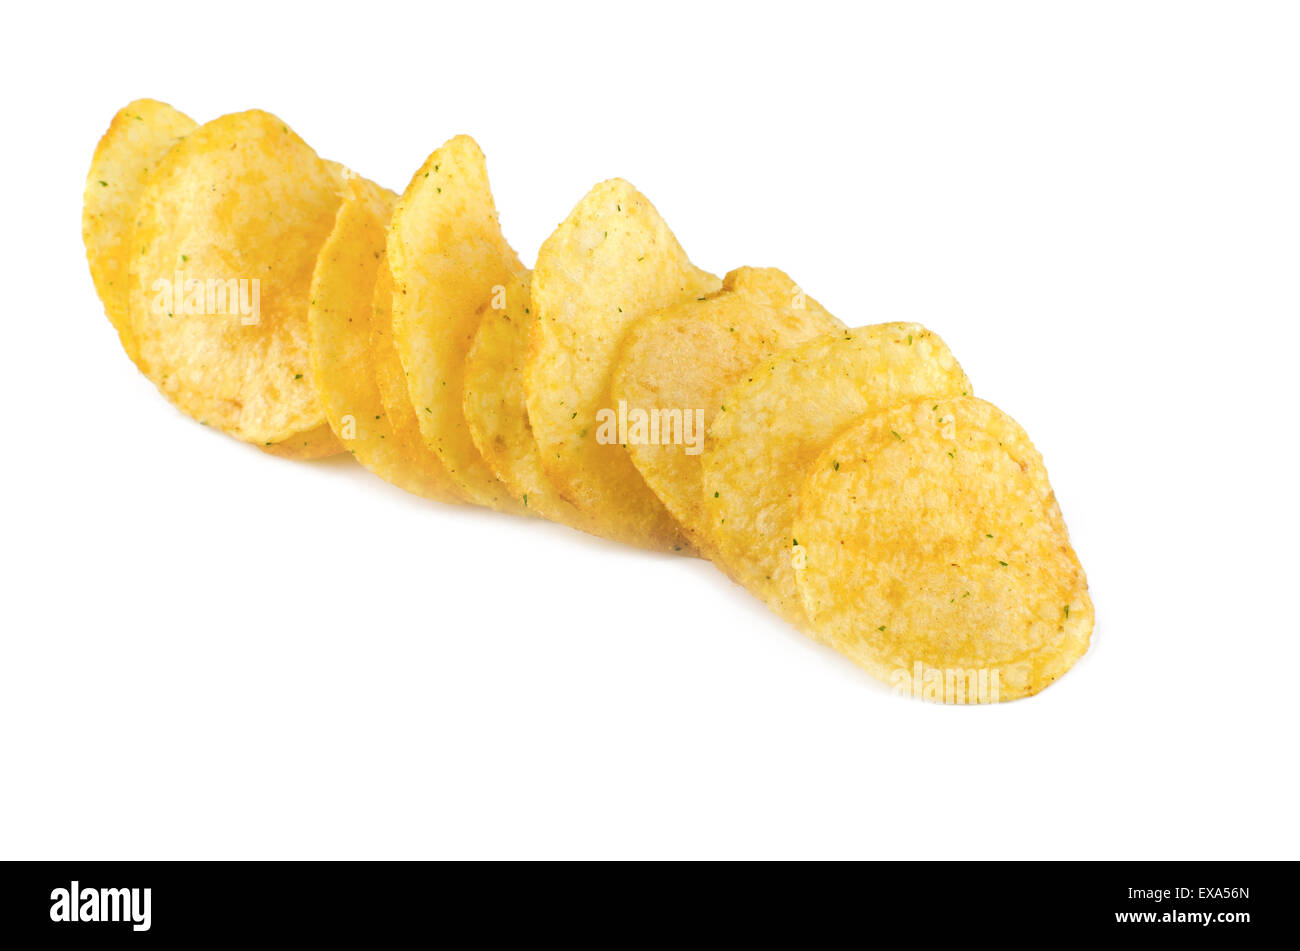 Fried potato chips isolate on white background Stock Photo